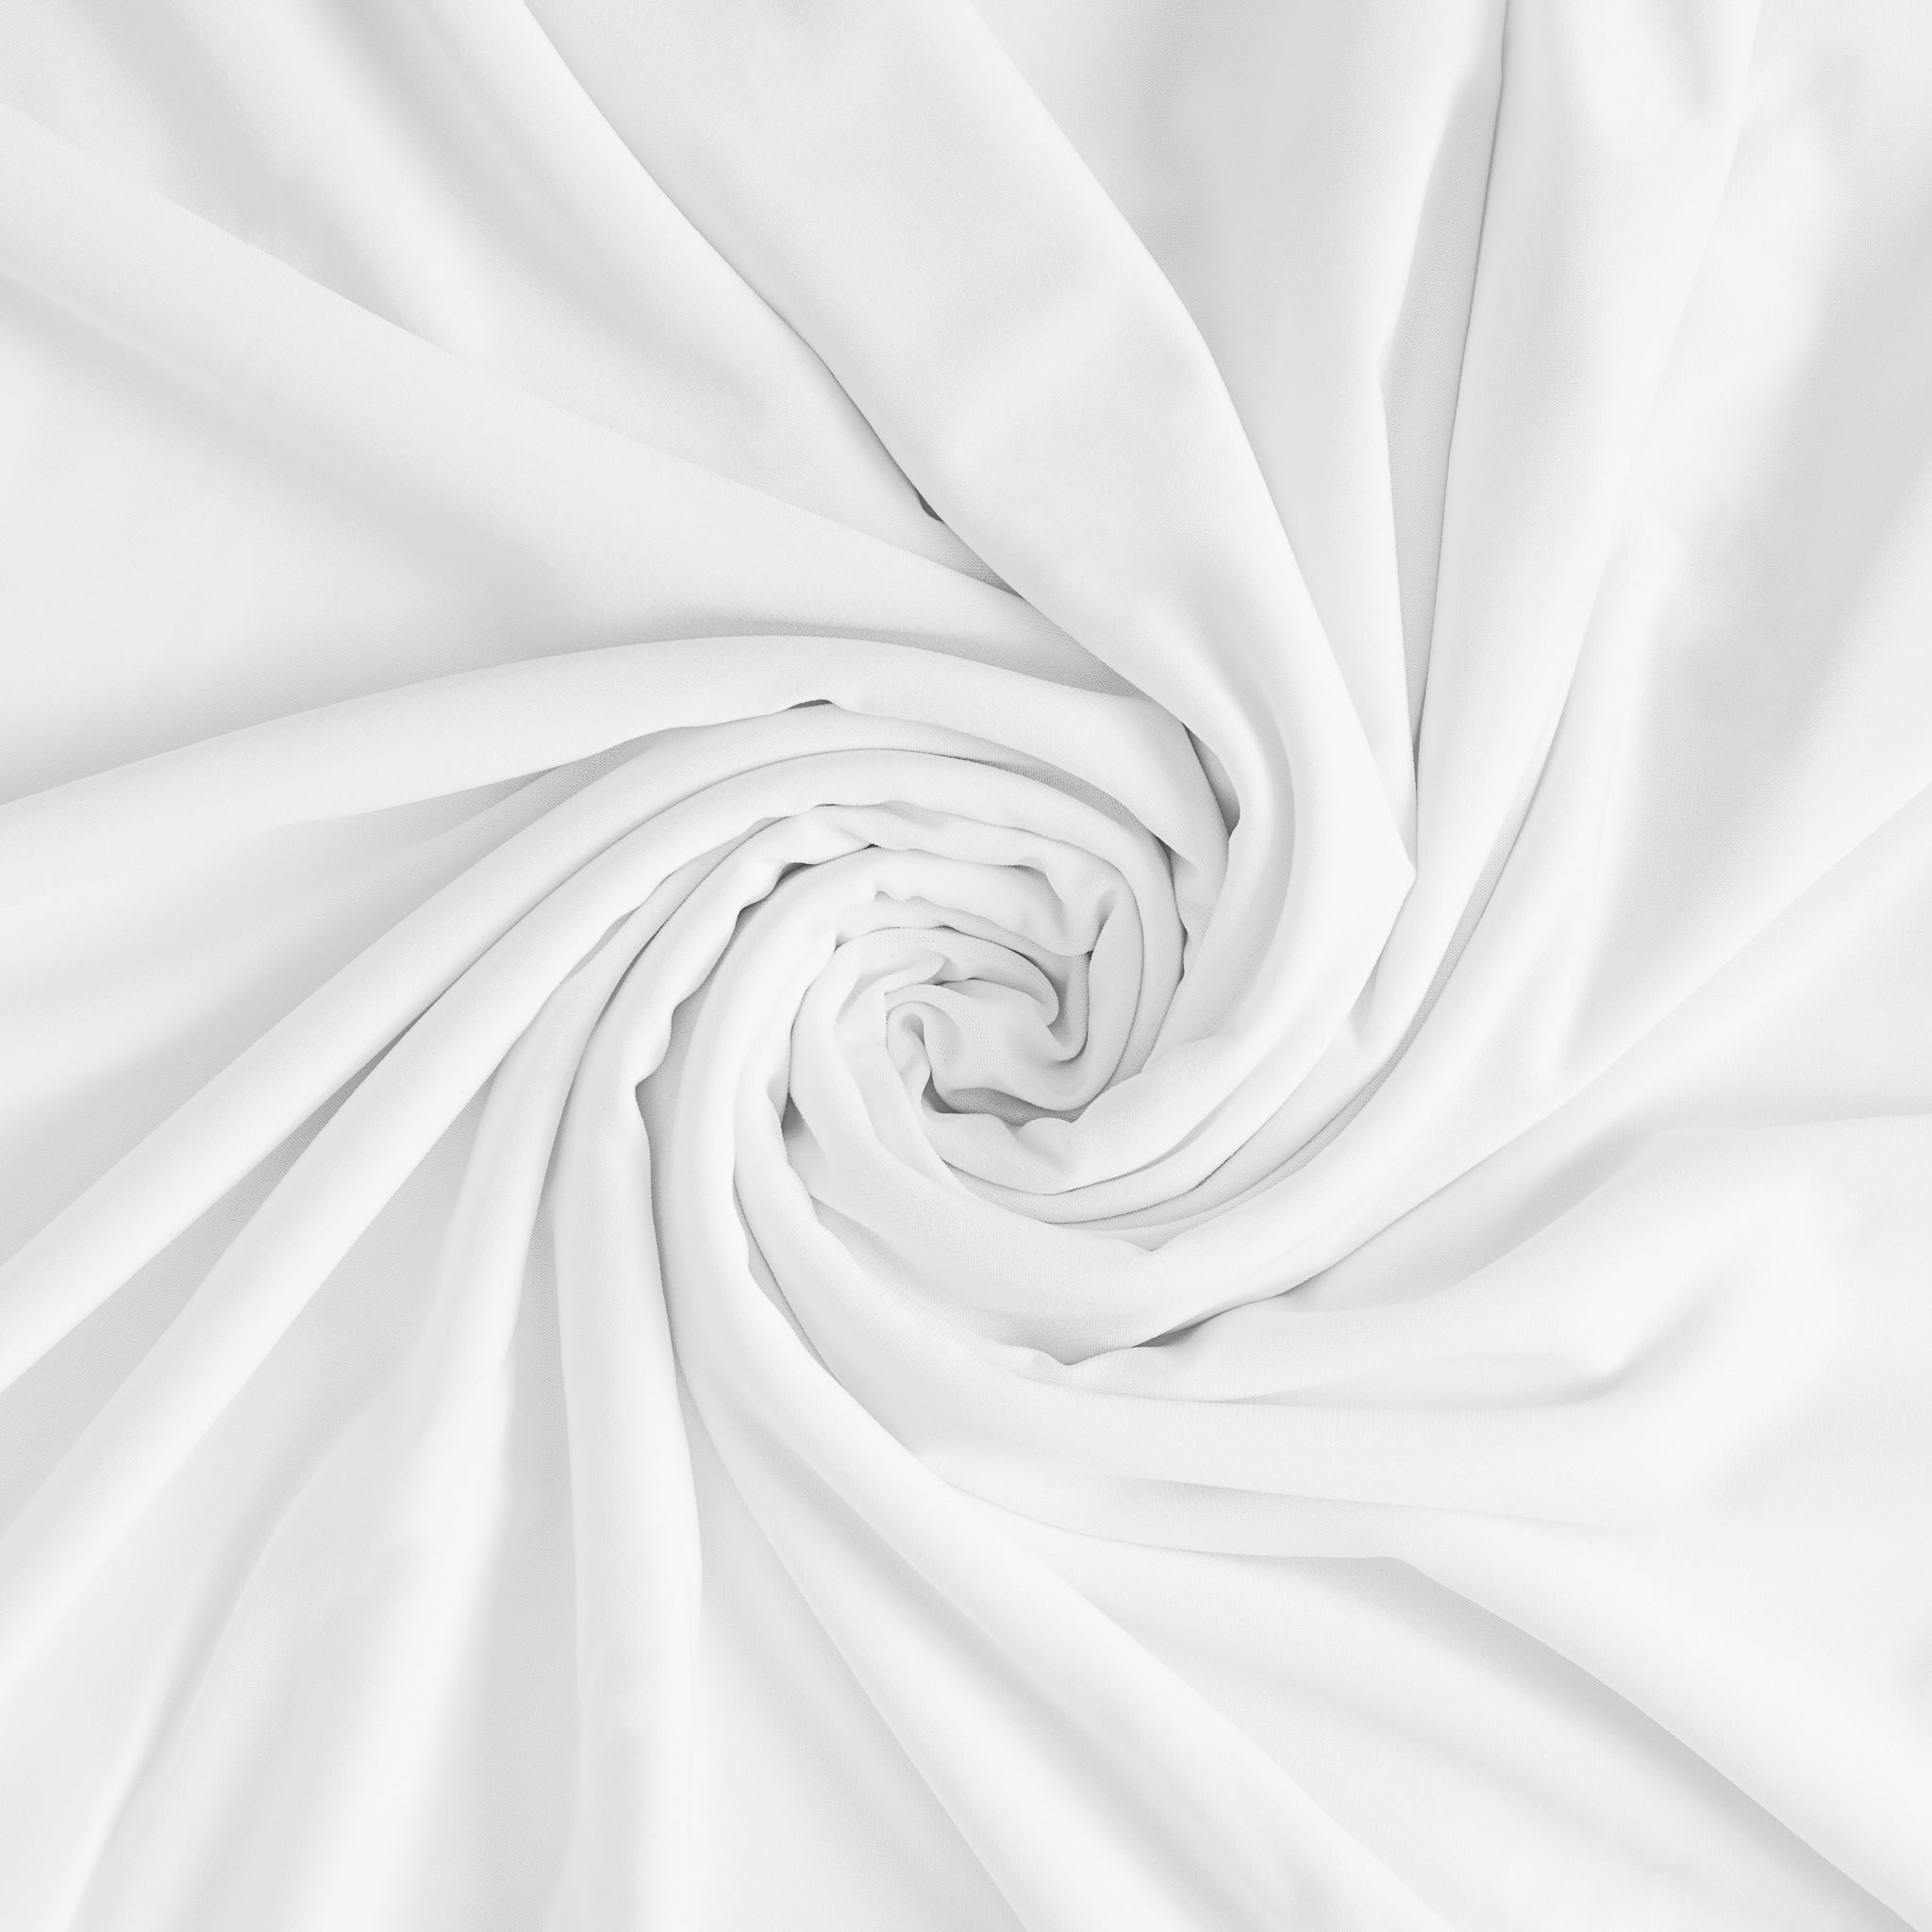 white cotton fabric roll